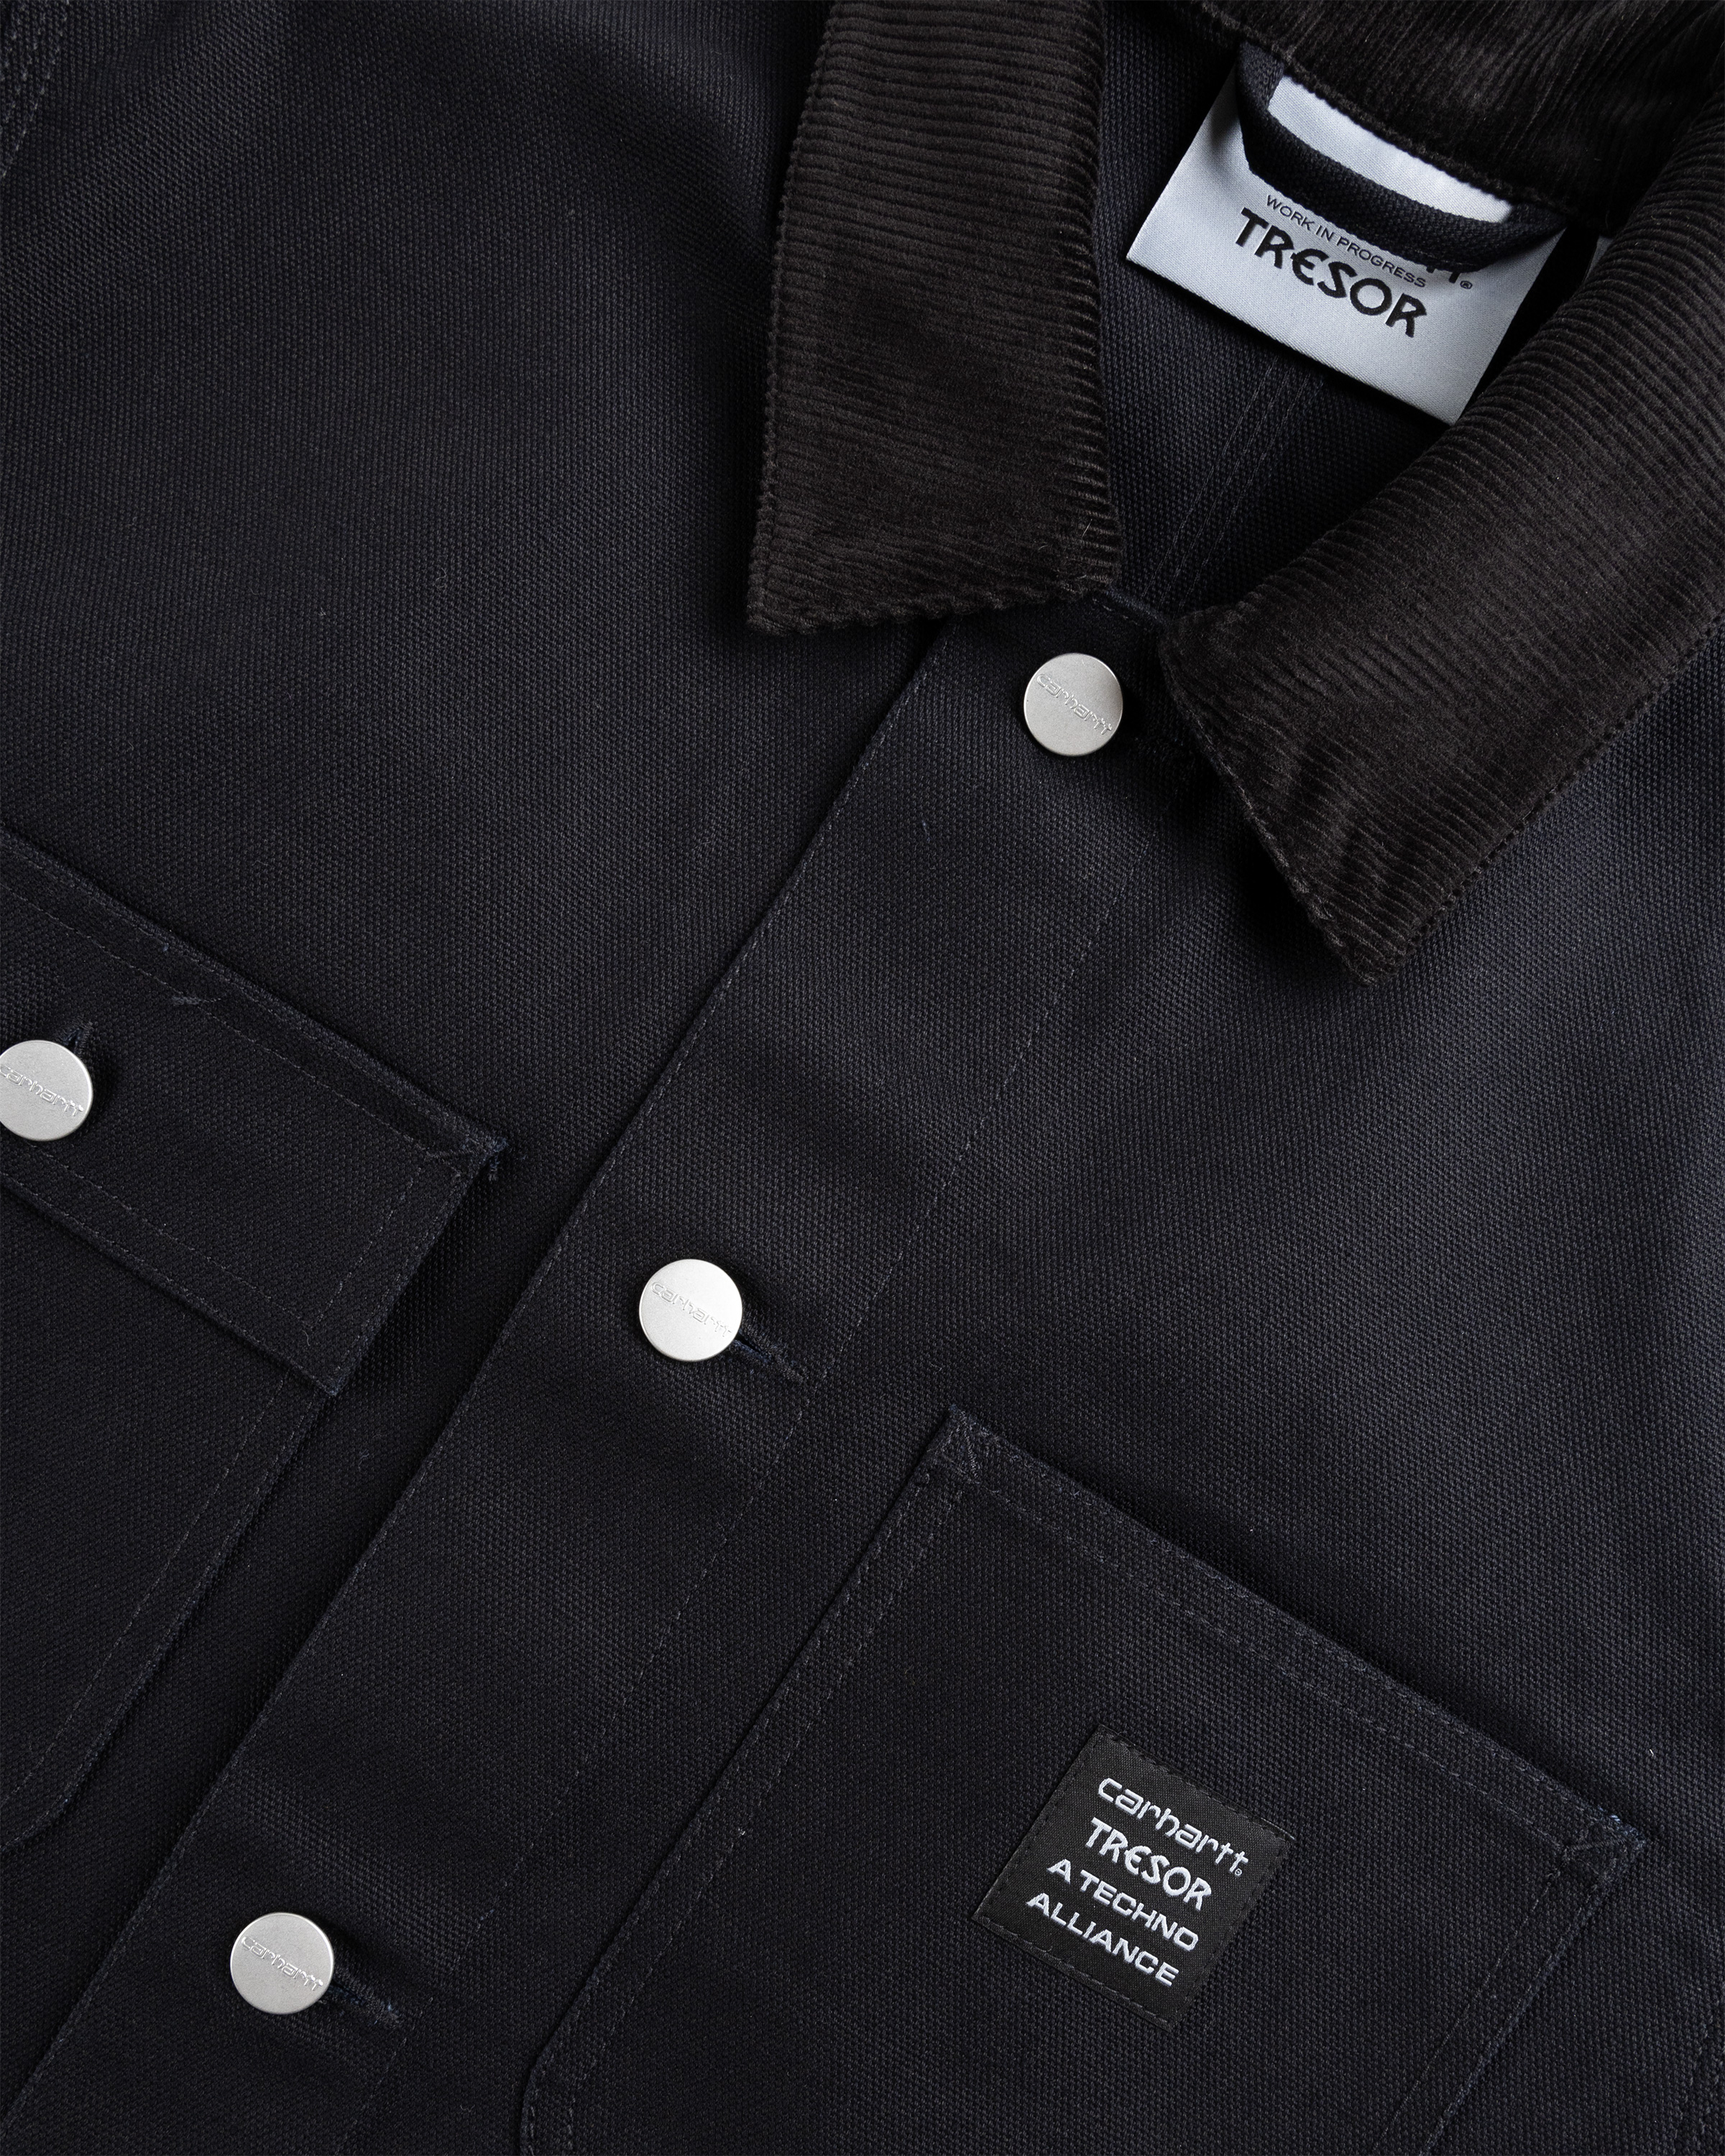 Carhartt WIP x Tresor – Way Of The Light Michigan Coat Black/Dark Grey Reflective - Outerwear - Black - Image 6